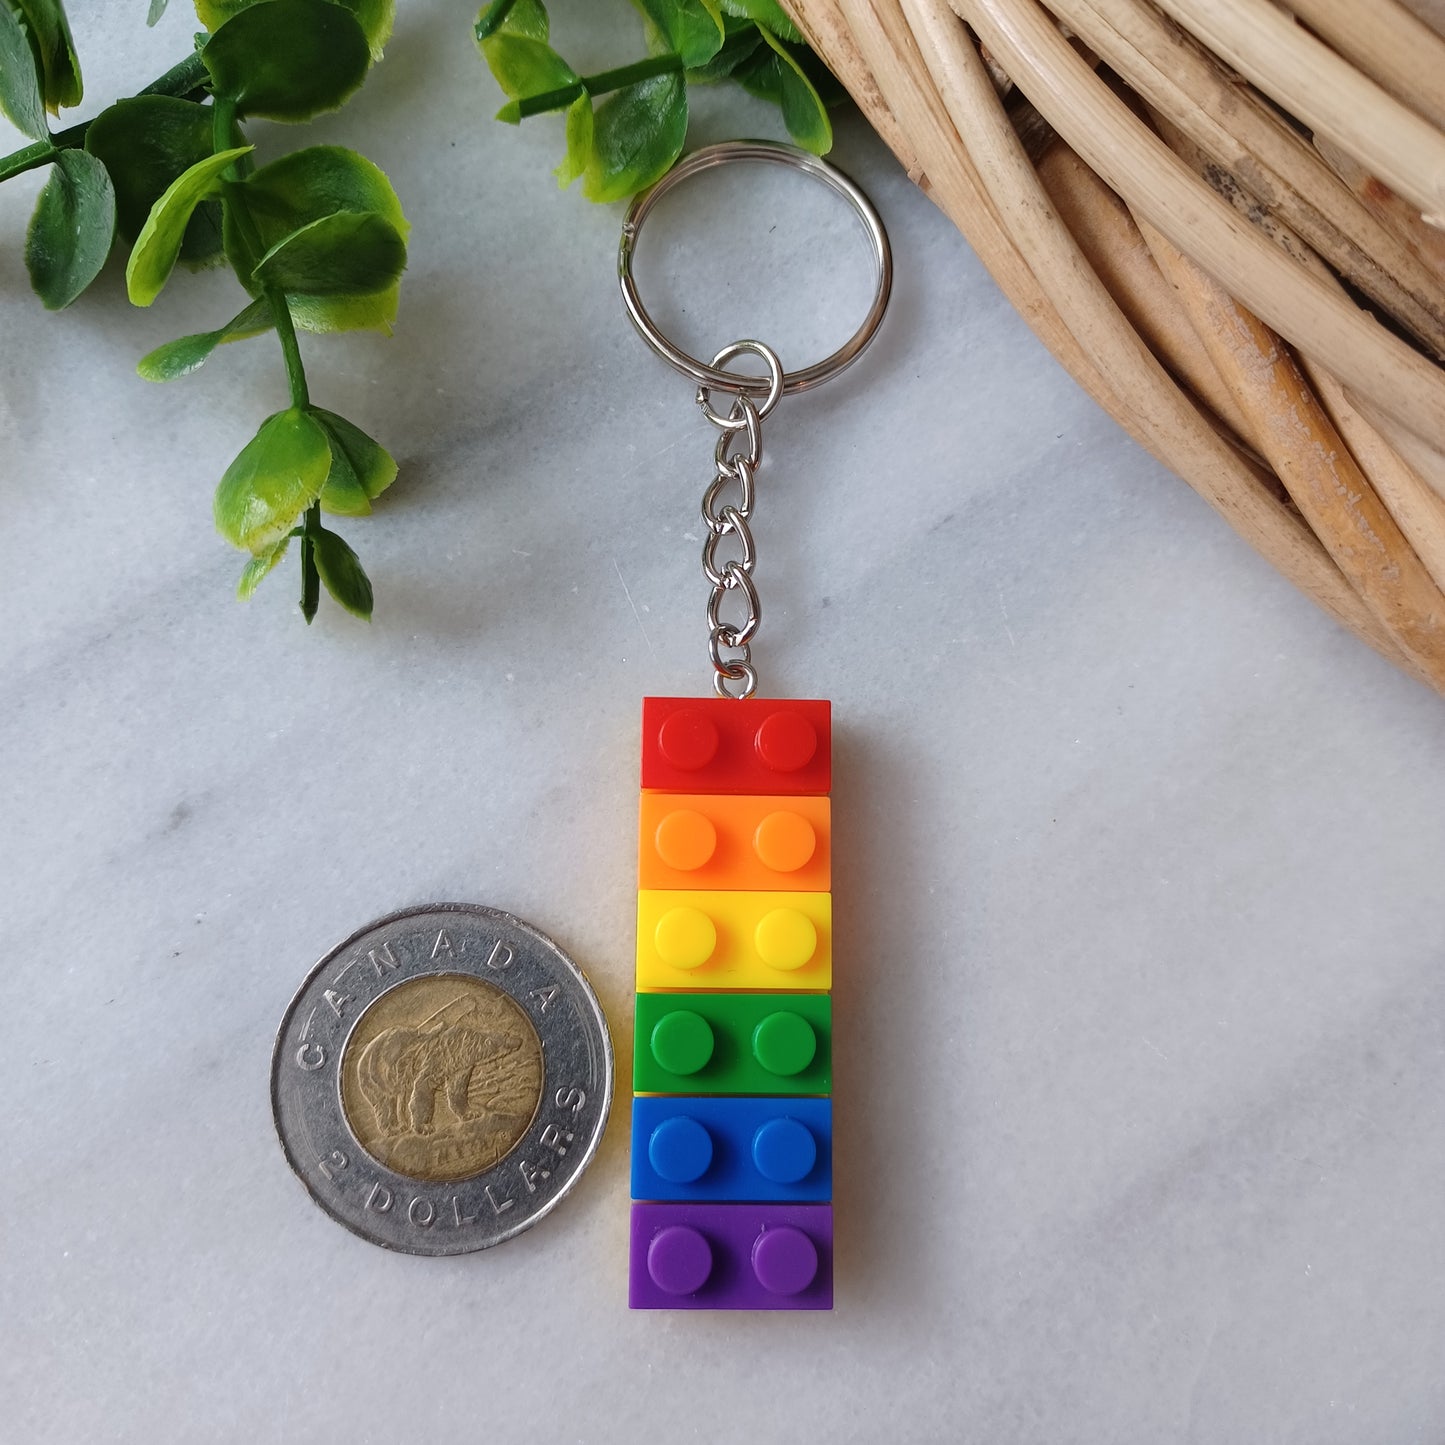 Porte-clés Lego arc-en-ciel/ Rainbow Lego keychain